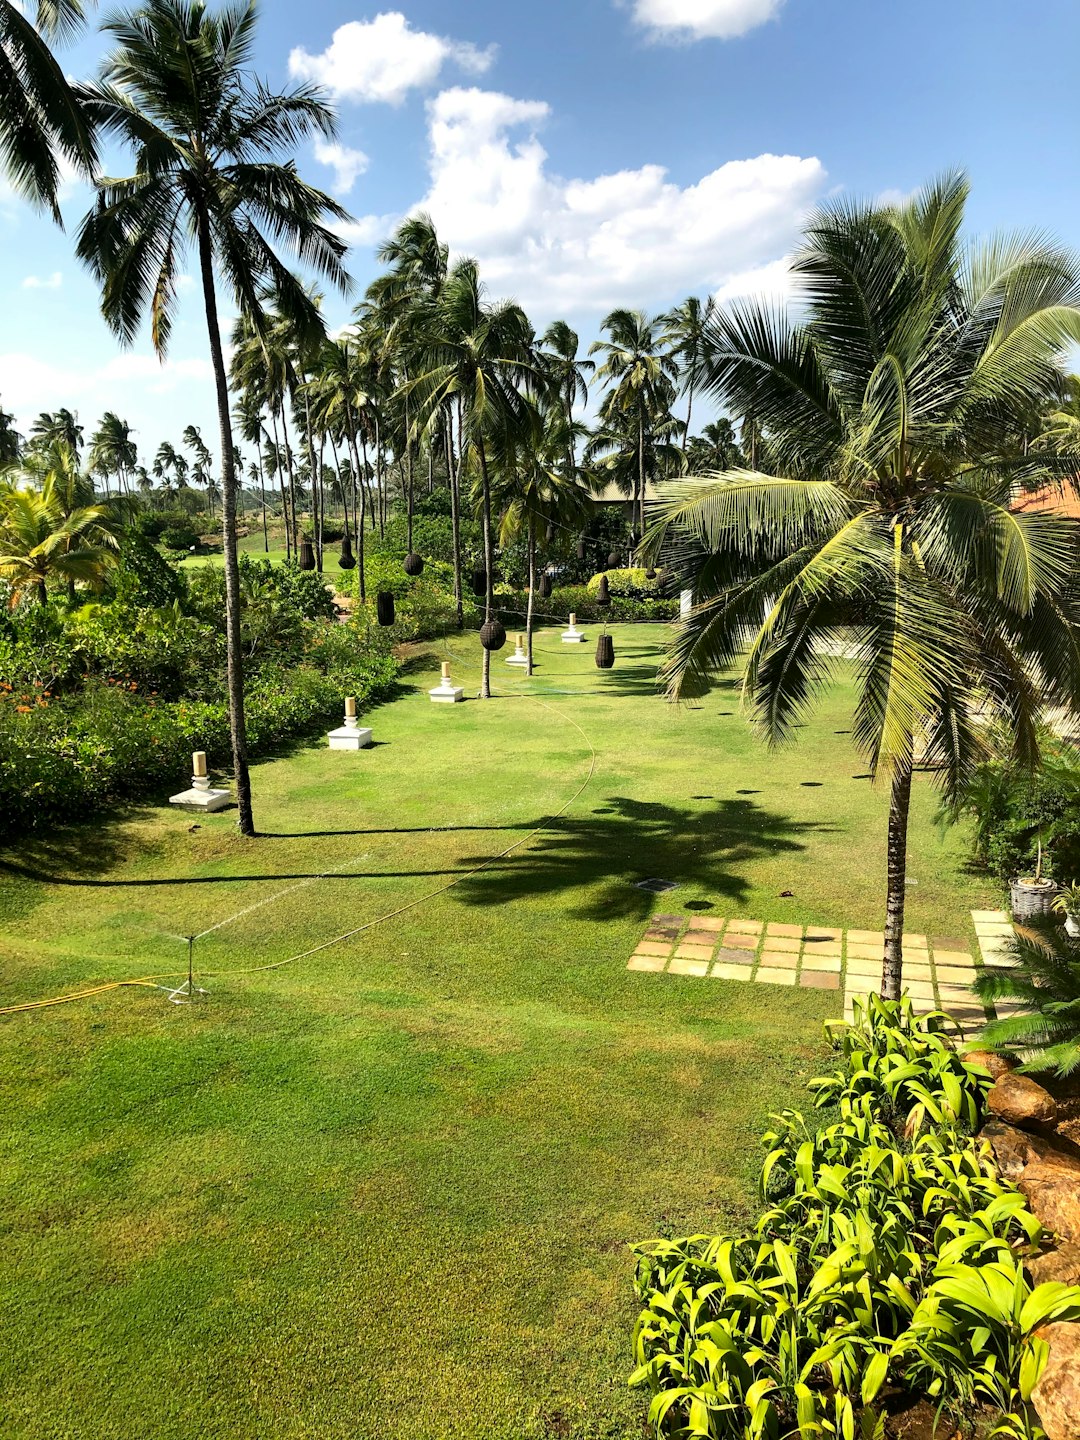 Travel Tips and Stories of Hambantota in Sri Lanka